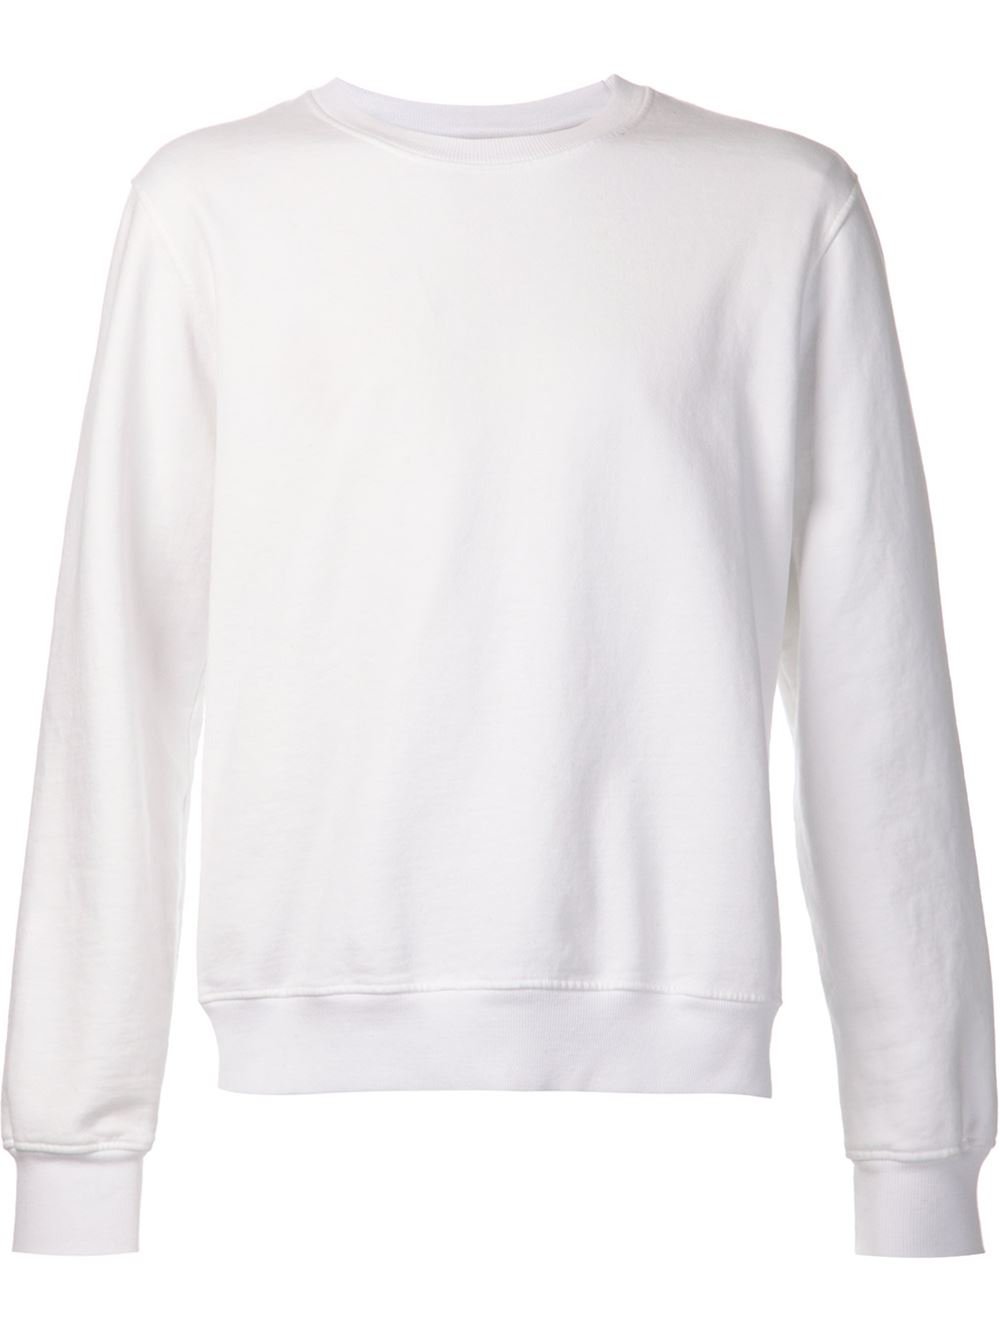 Download Lyst - Fadeless Crew Neck Sweatshirt in White for Men